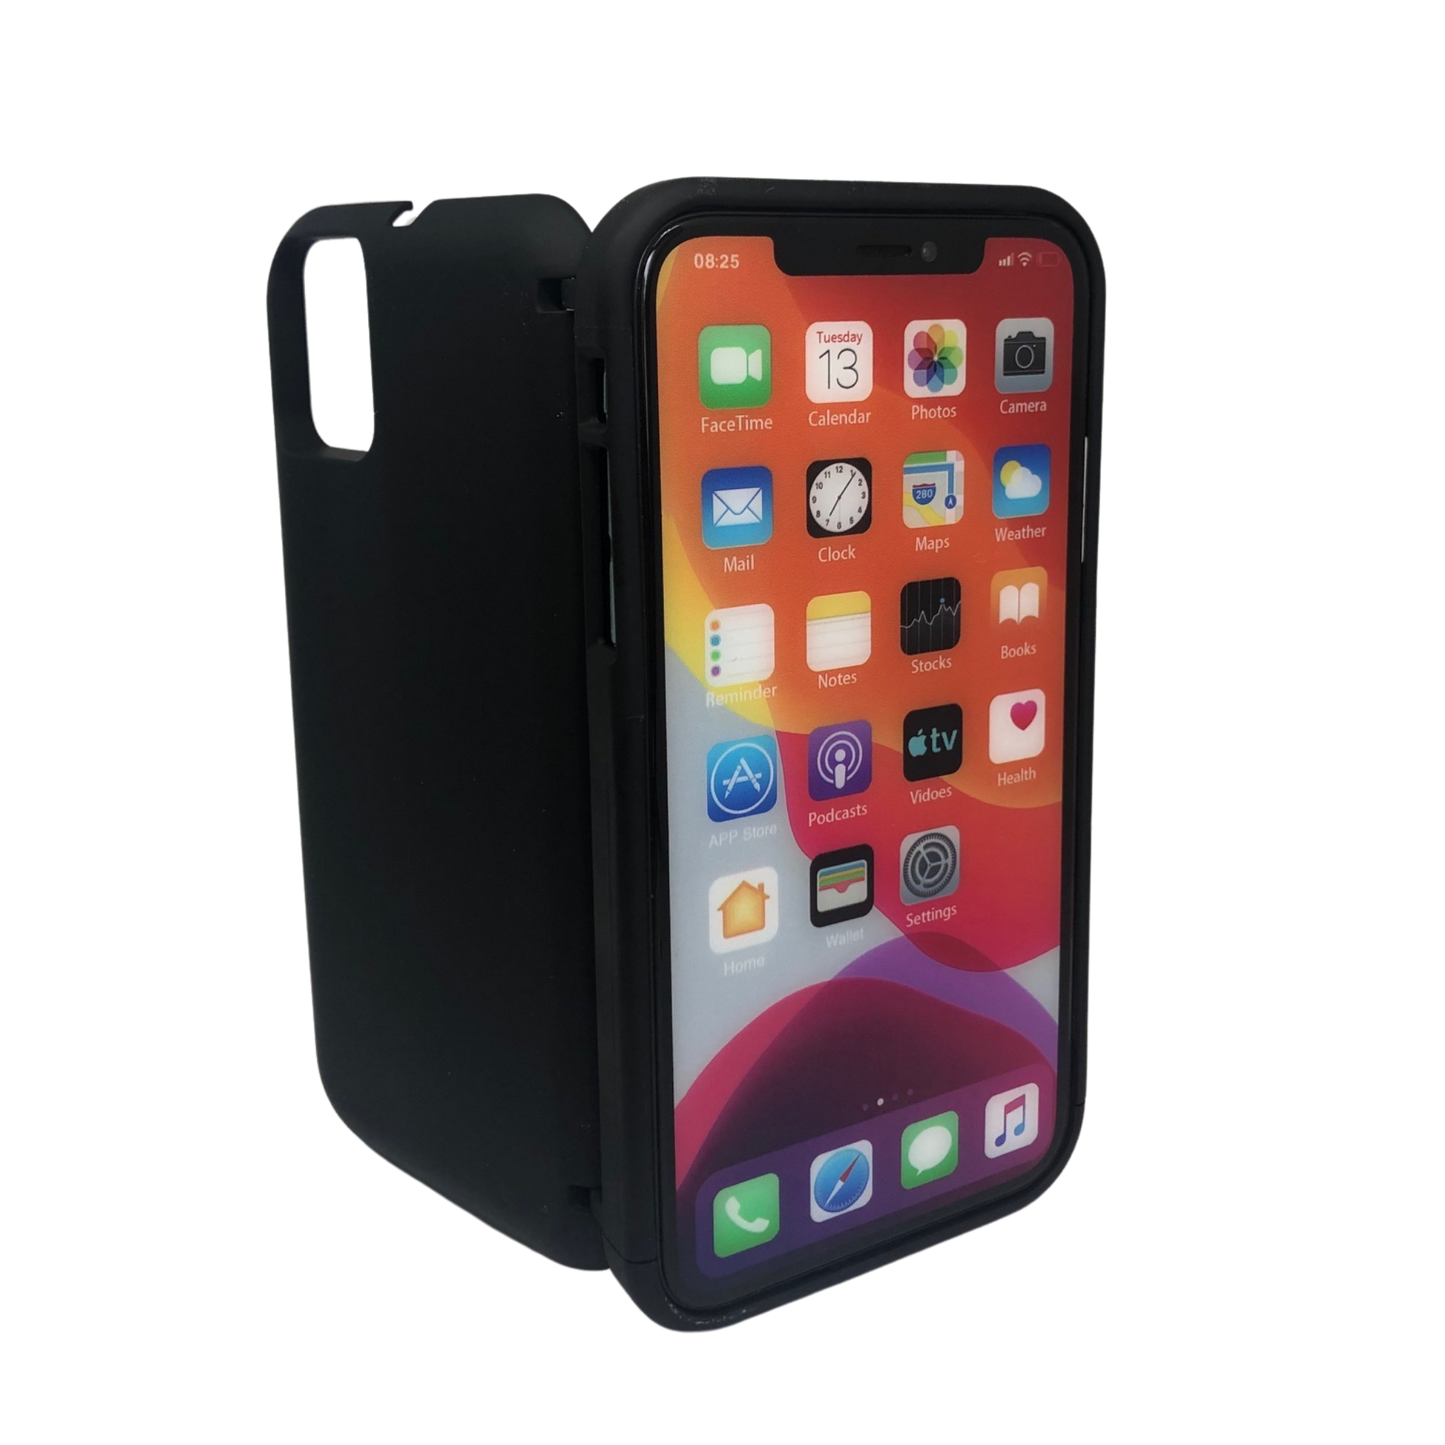 iPhone XR wallet / storage phone case